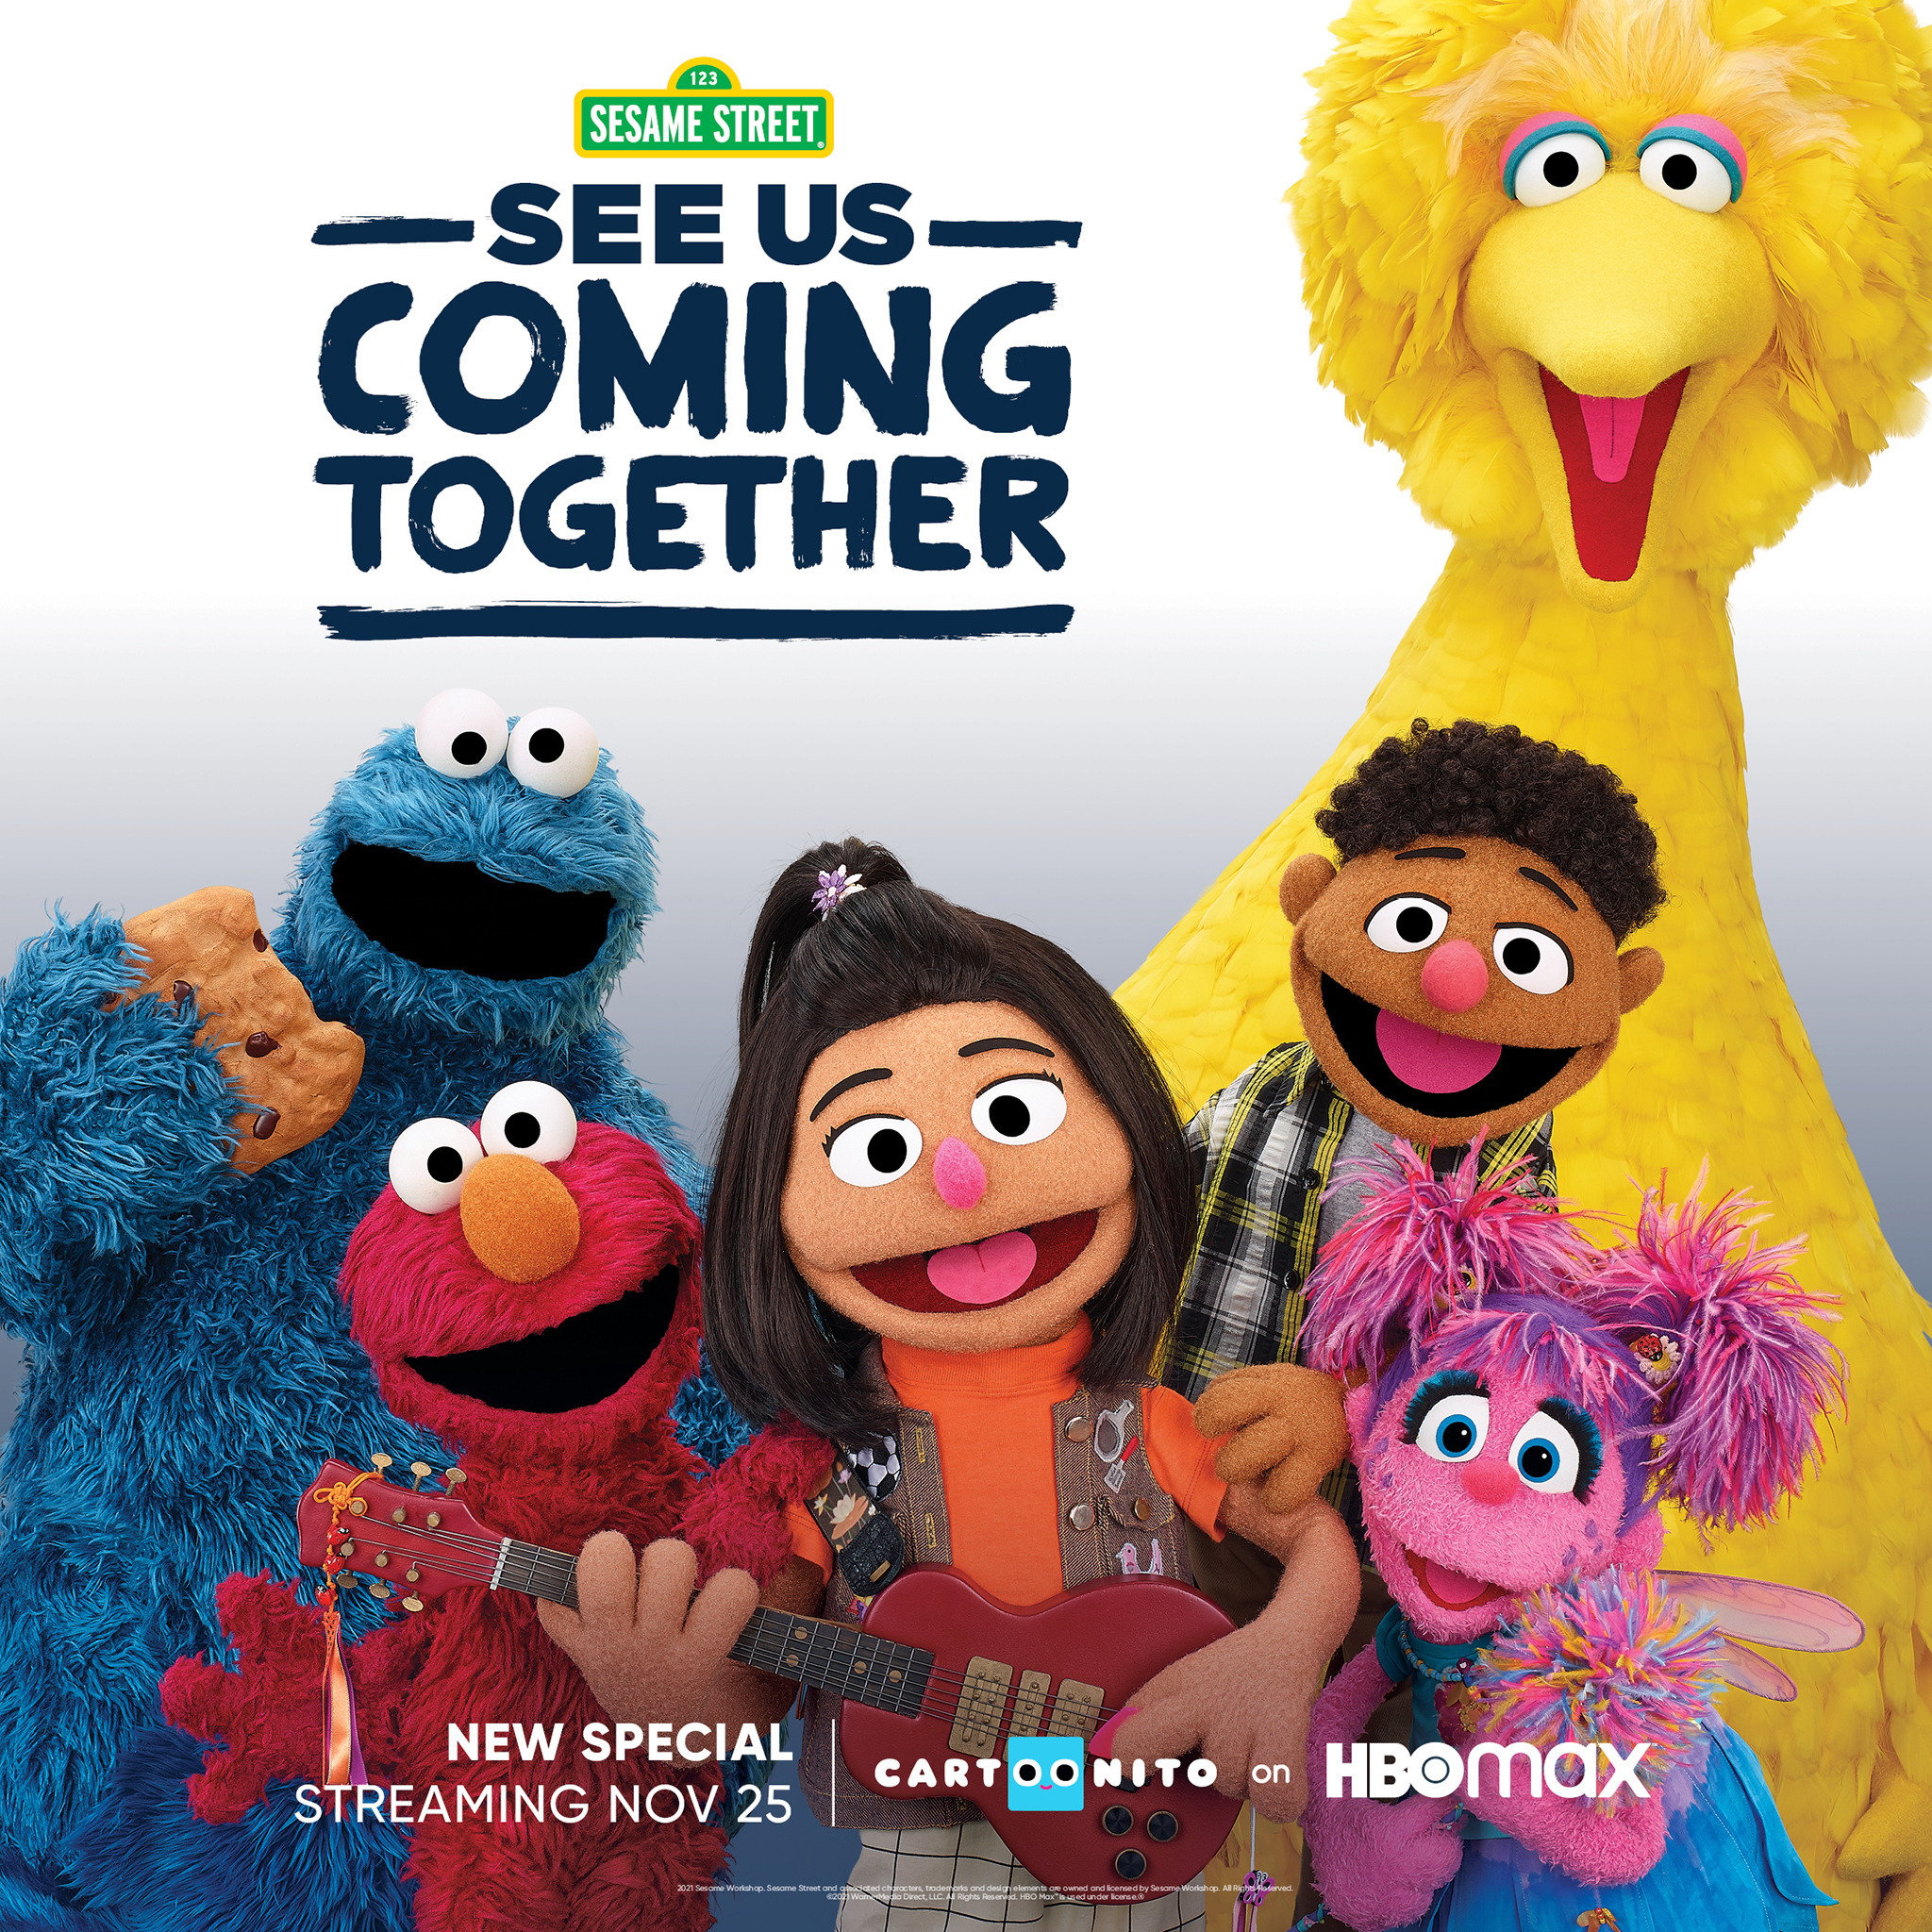 Sesame Street (8 of 8) Mega Sized Movie Poster Image IMP Awards